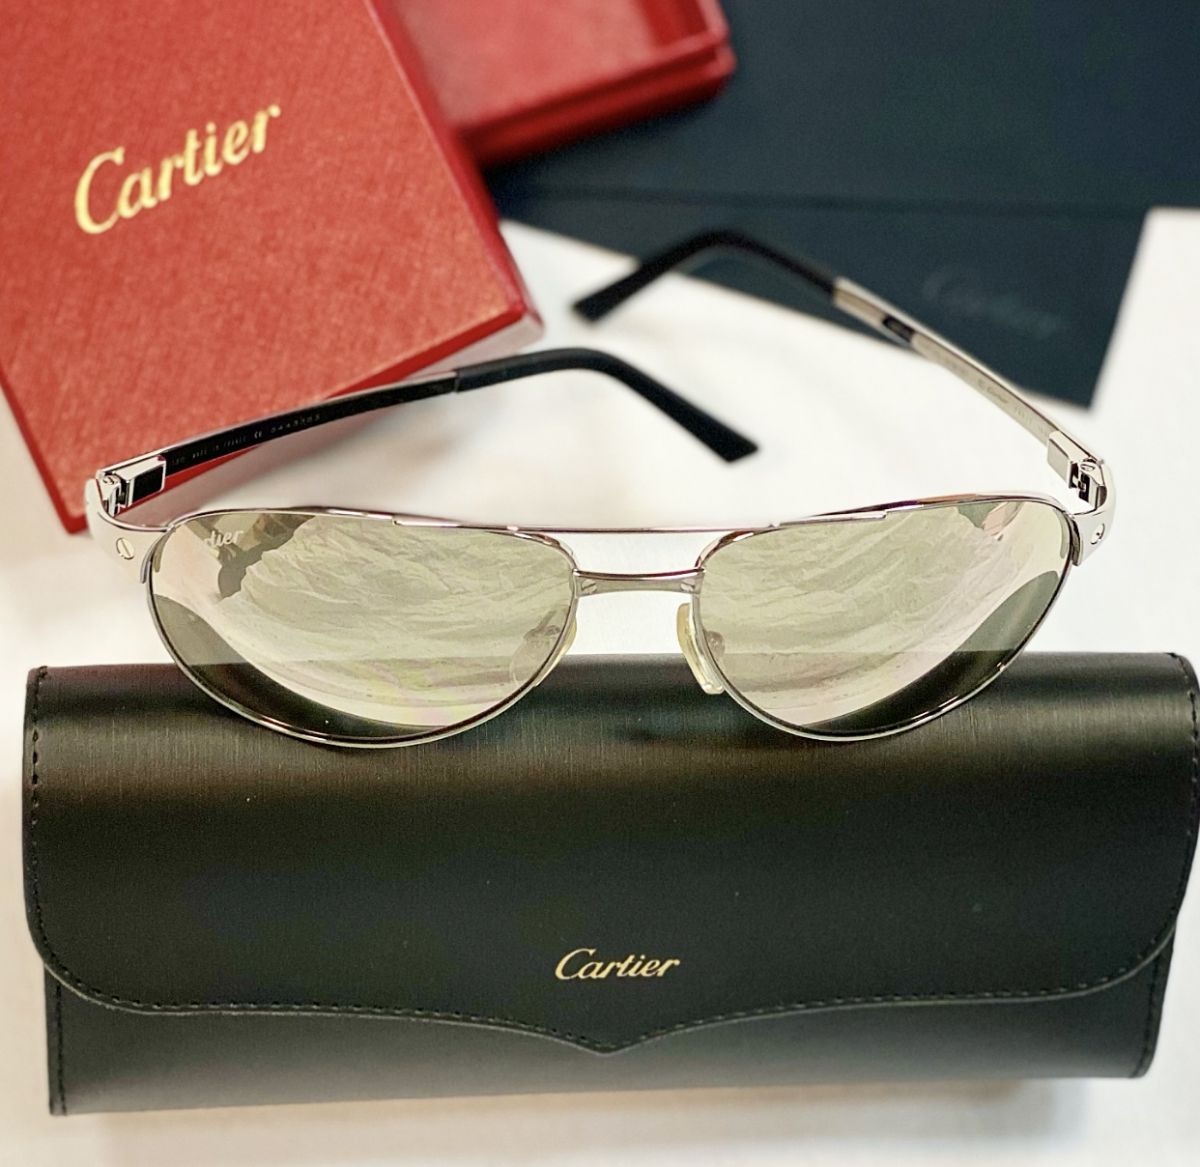 Очки Cartier цена 10 770 руб 